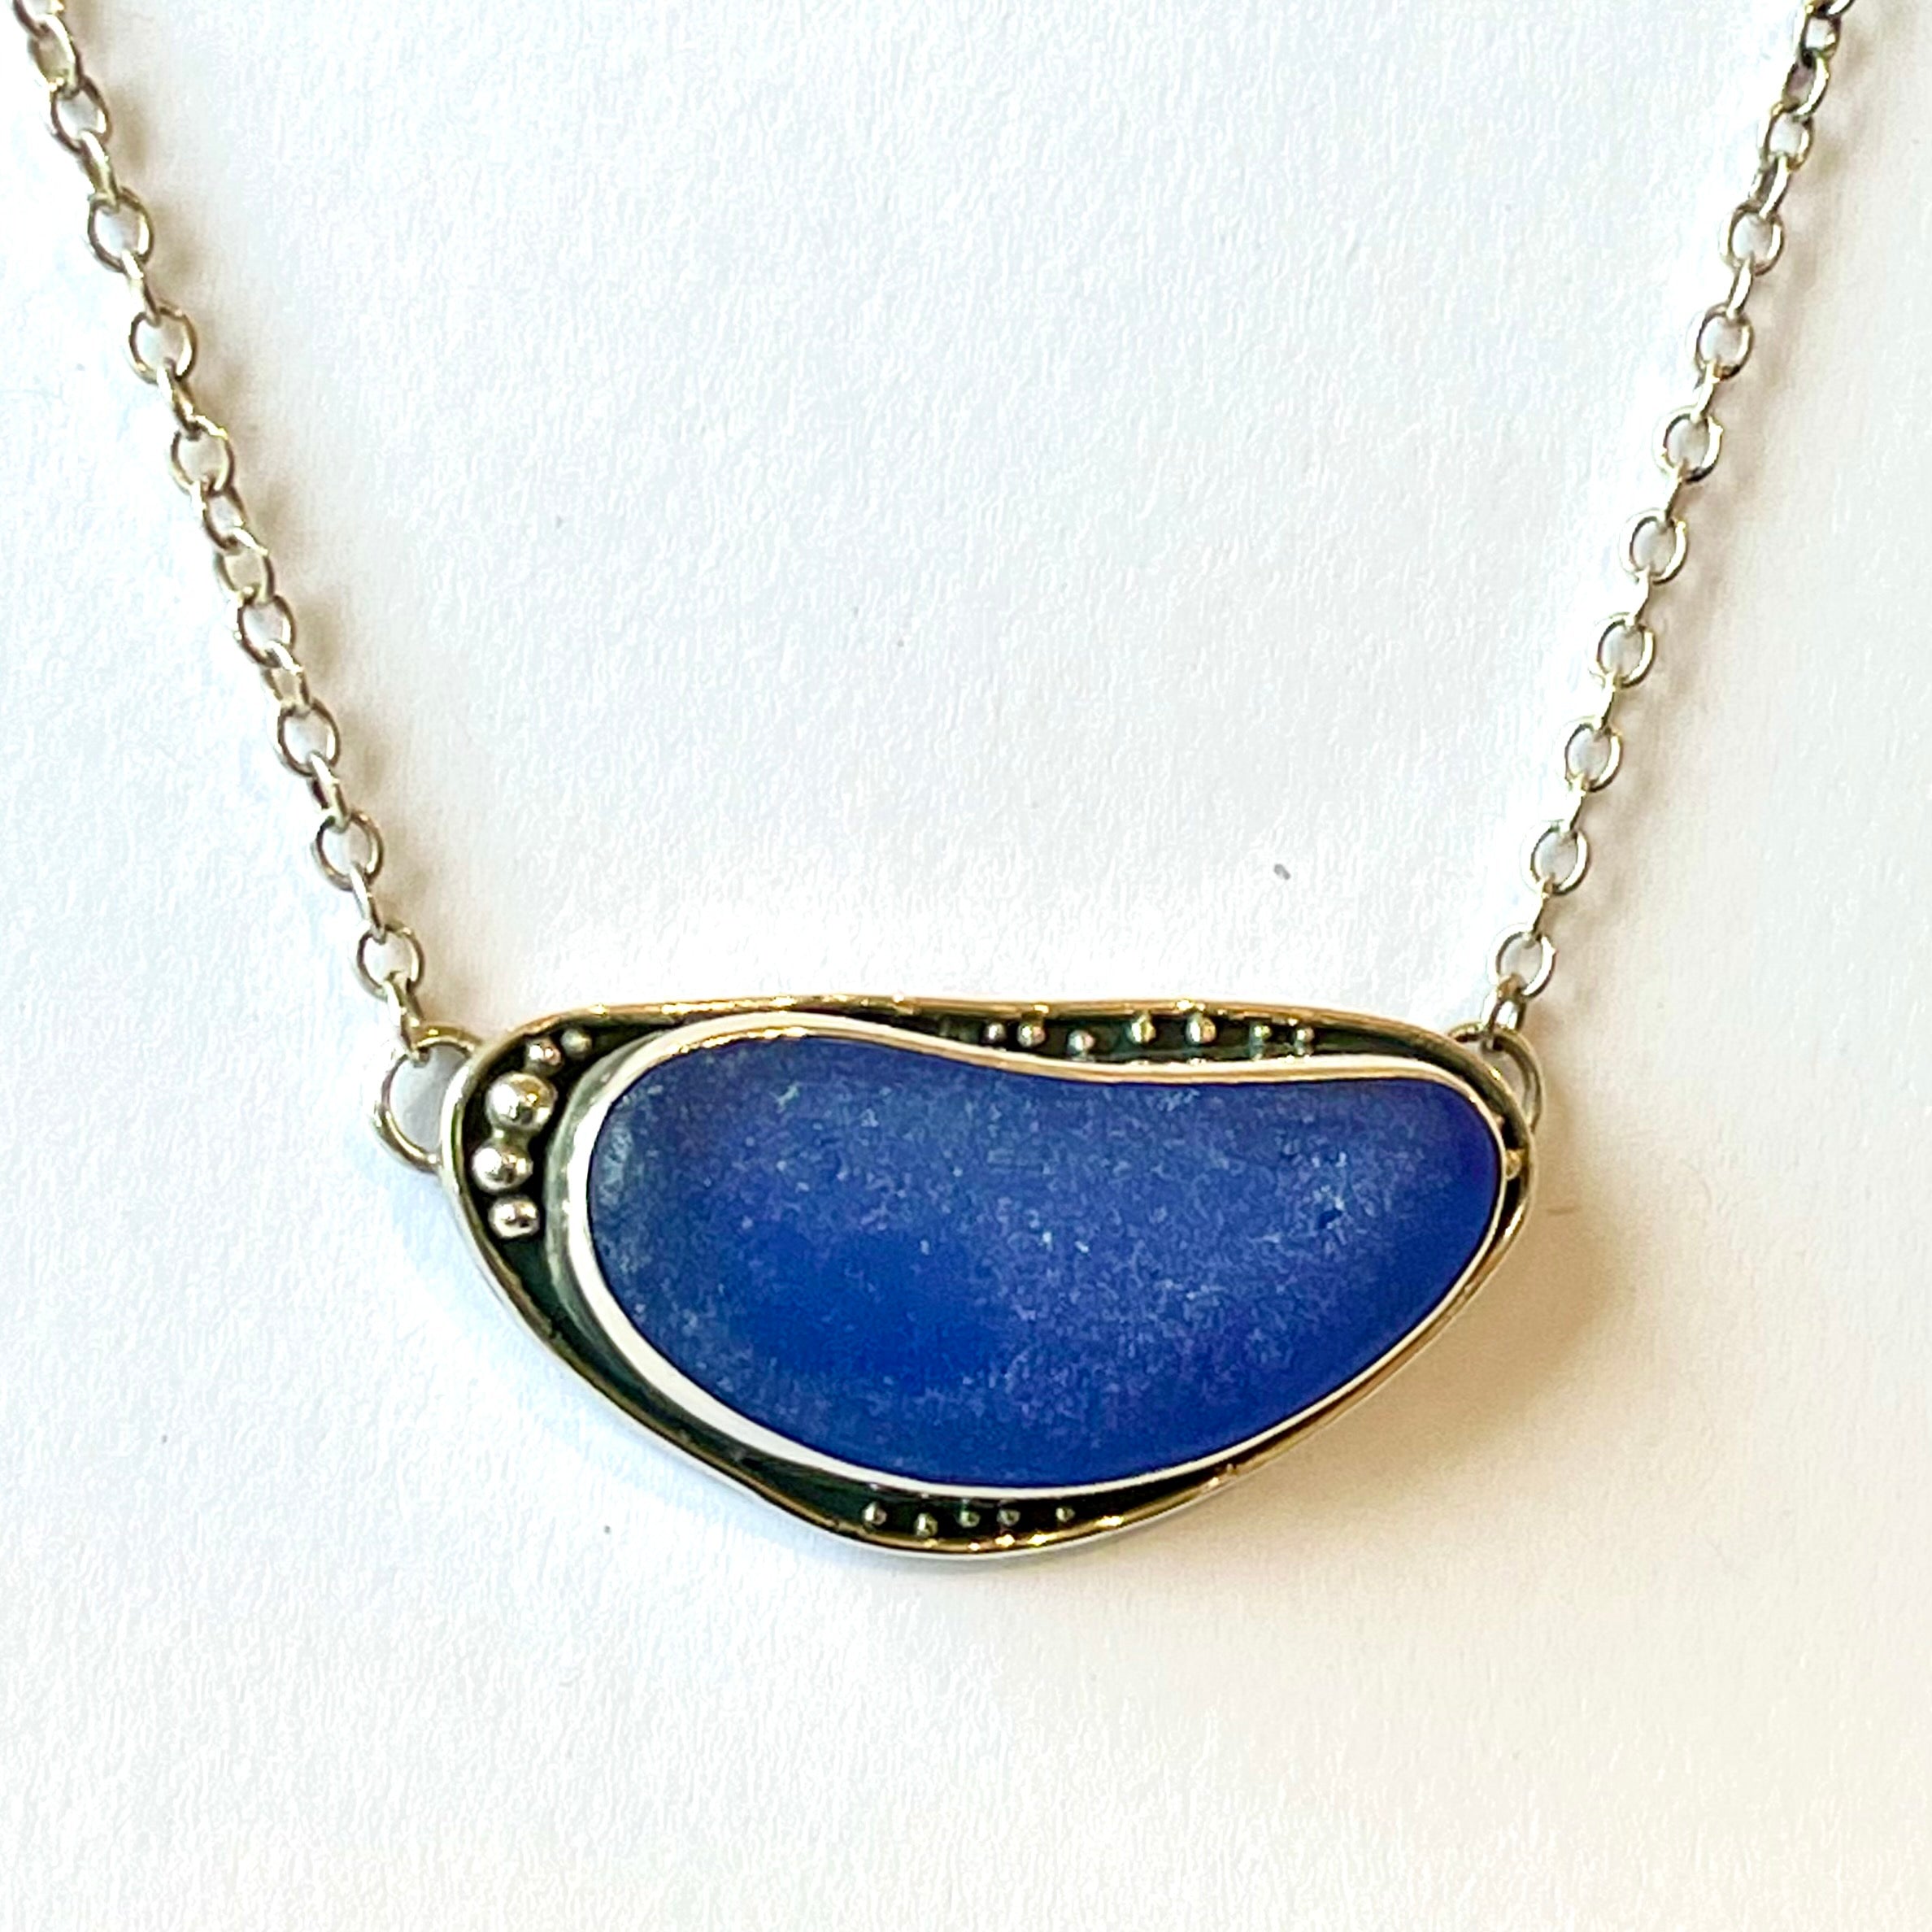 Blue Seaglass necklace